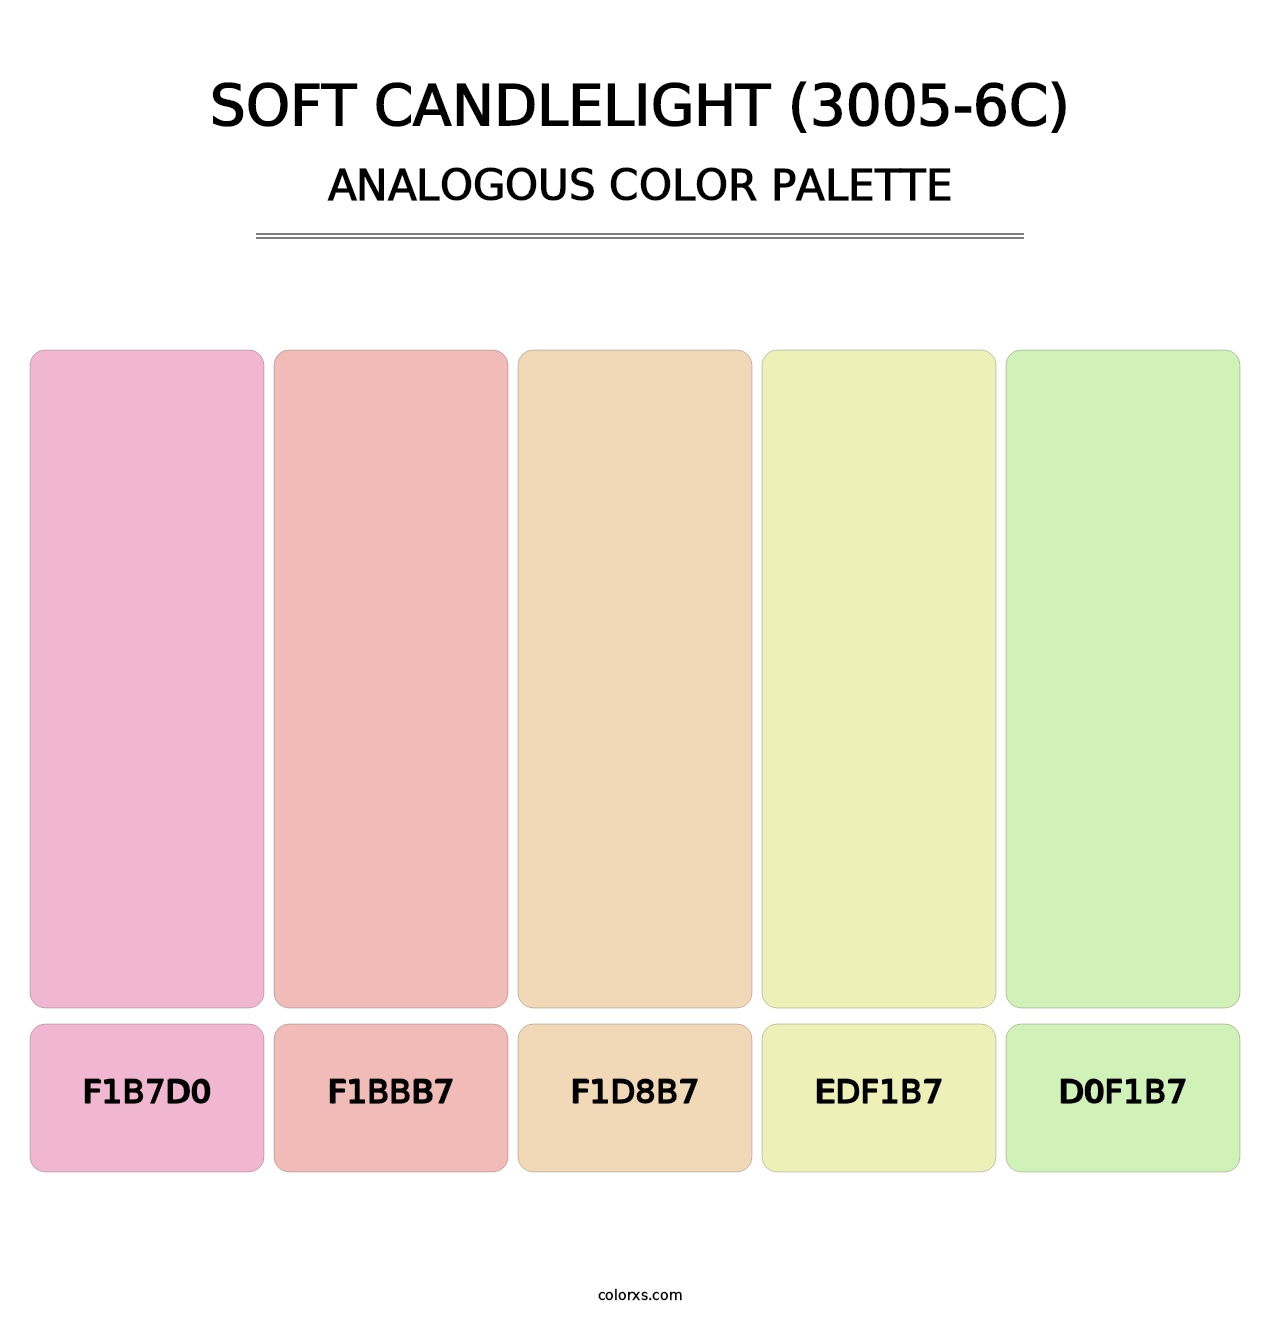 Soft Candlelight (3005-6C) - Analogous Color Palette